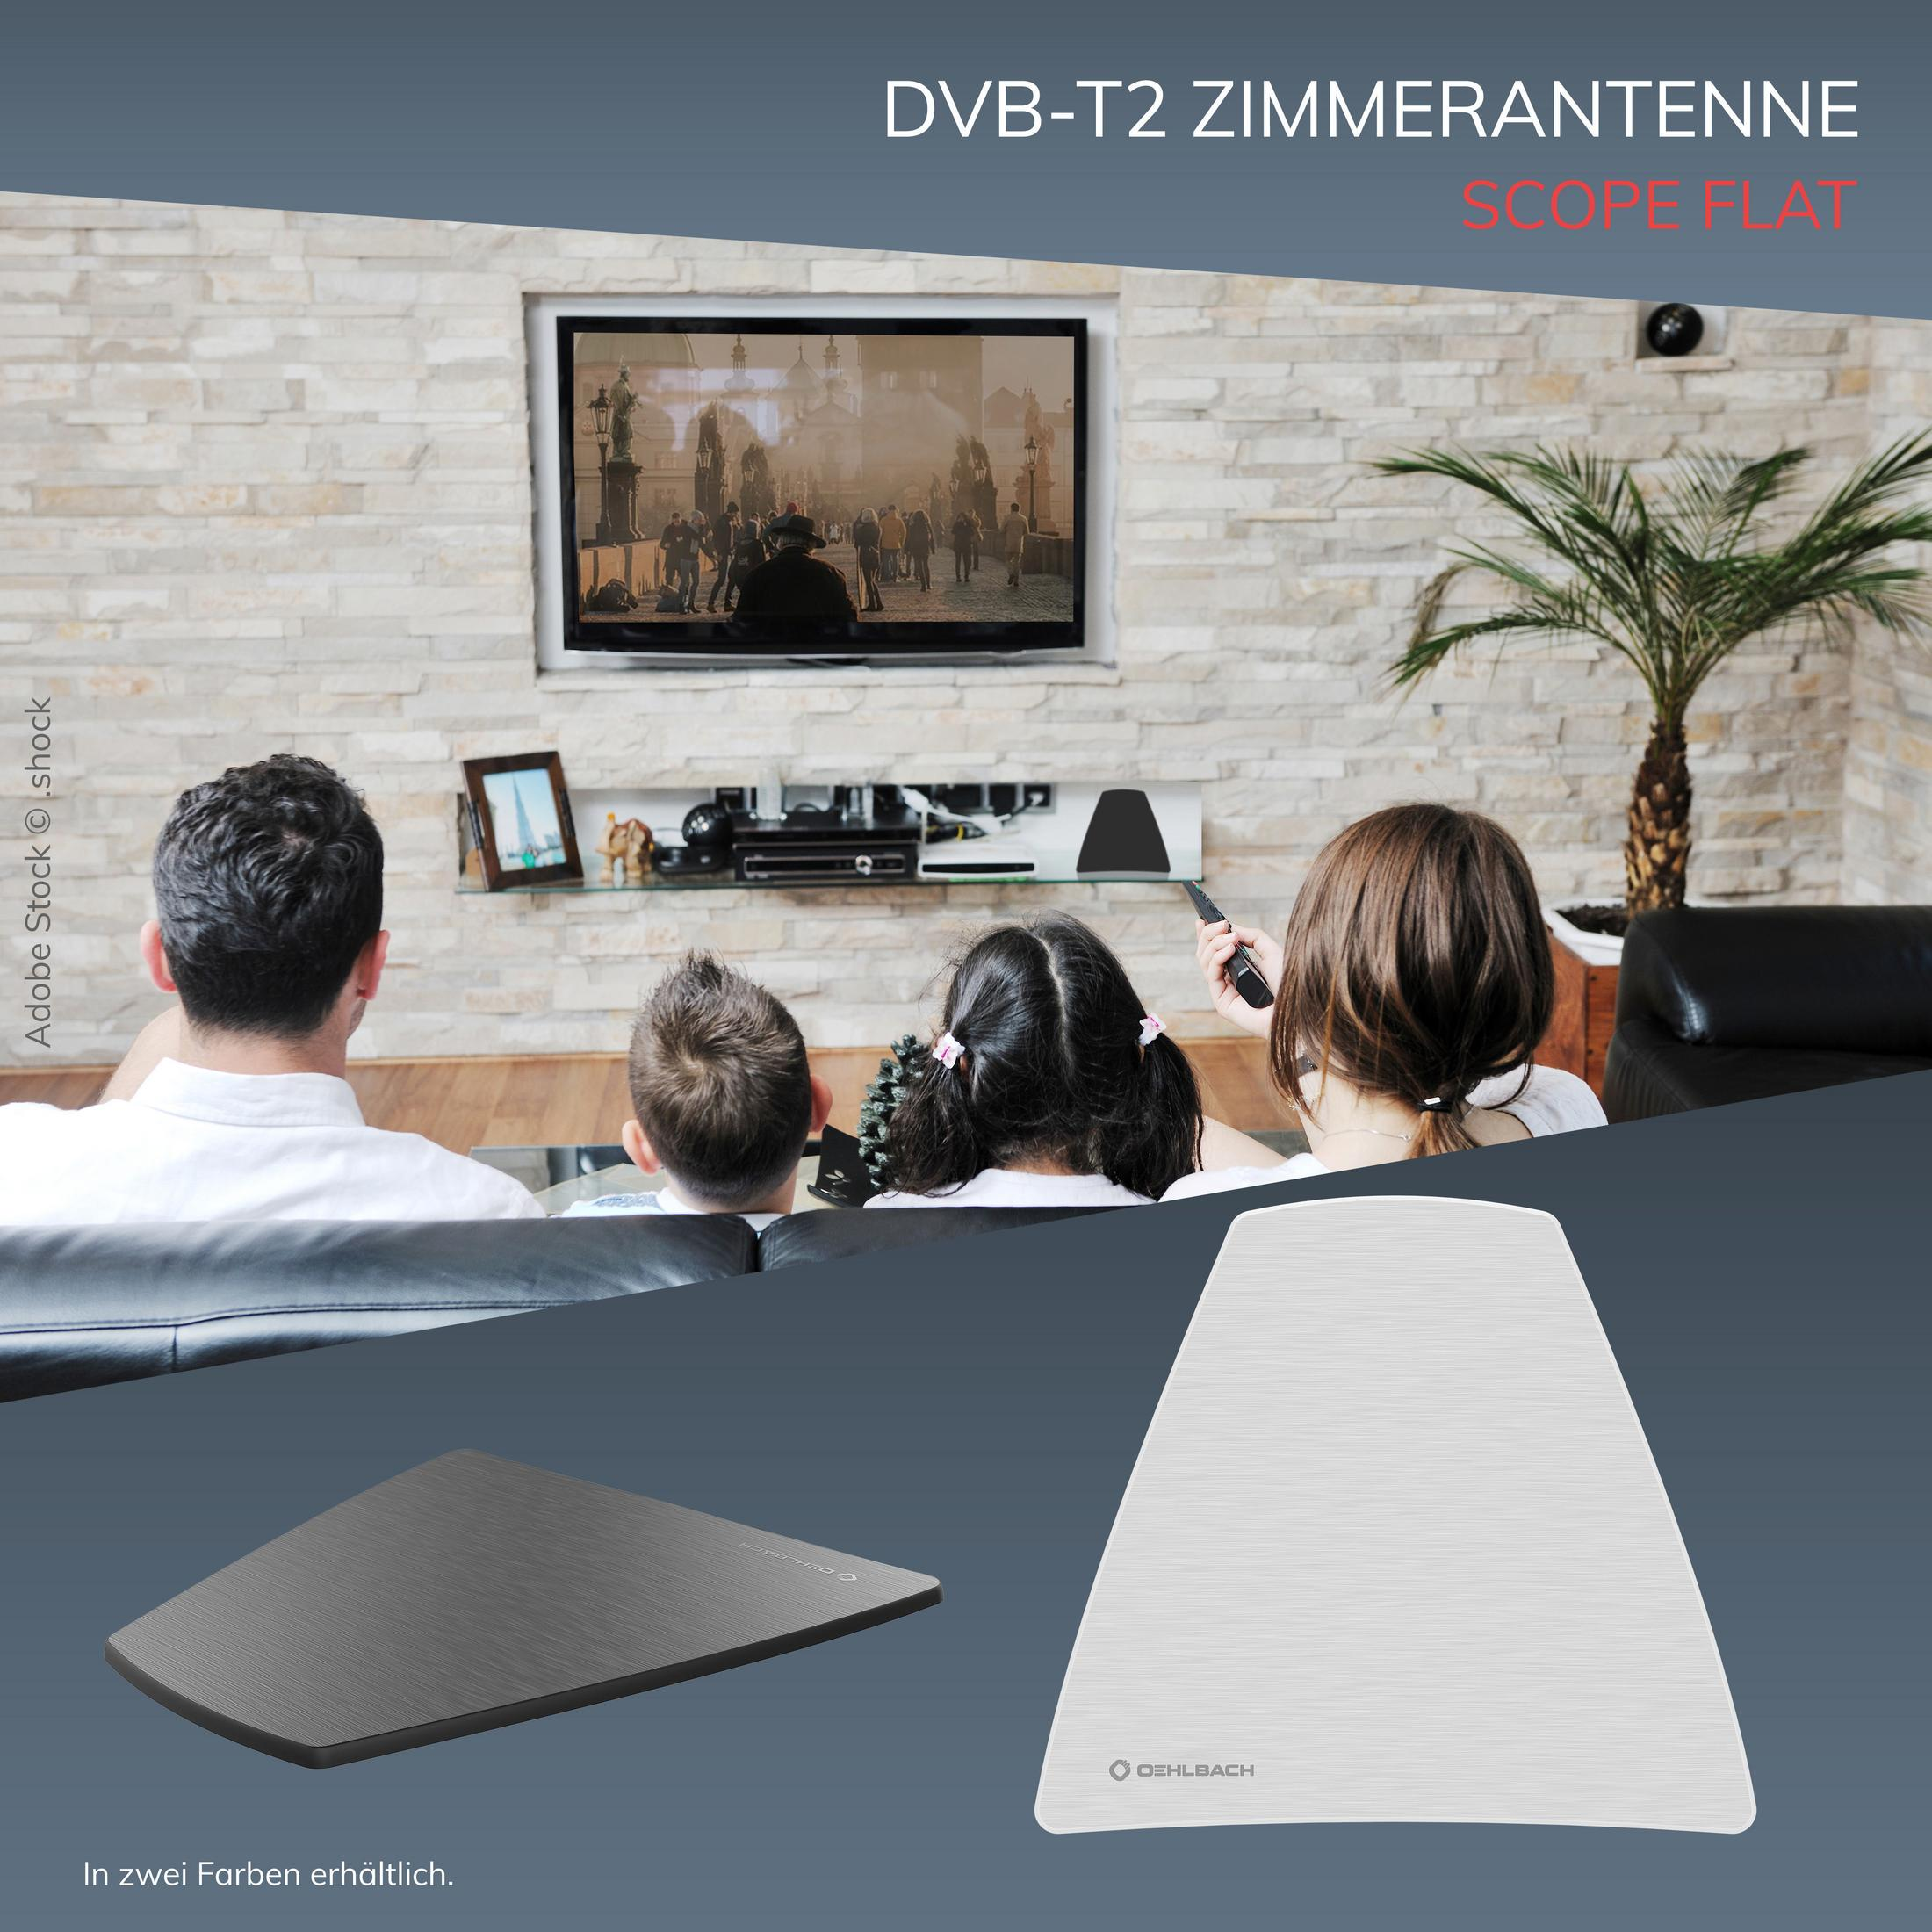 D1C17231 FLAT SCOPE DVB-T2 Zimmerantenne ANTENNE HD OEHLBACH DVB-T2 SCHWARZ